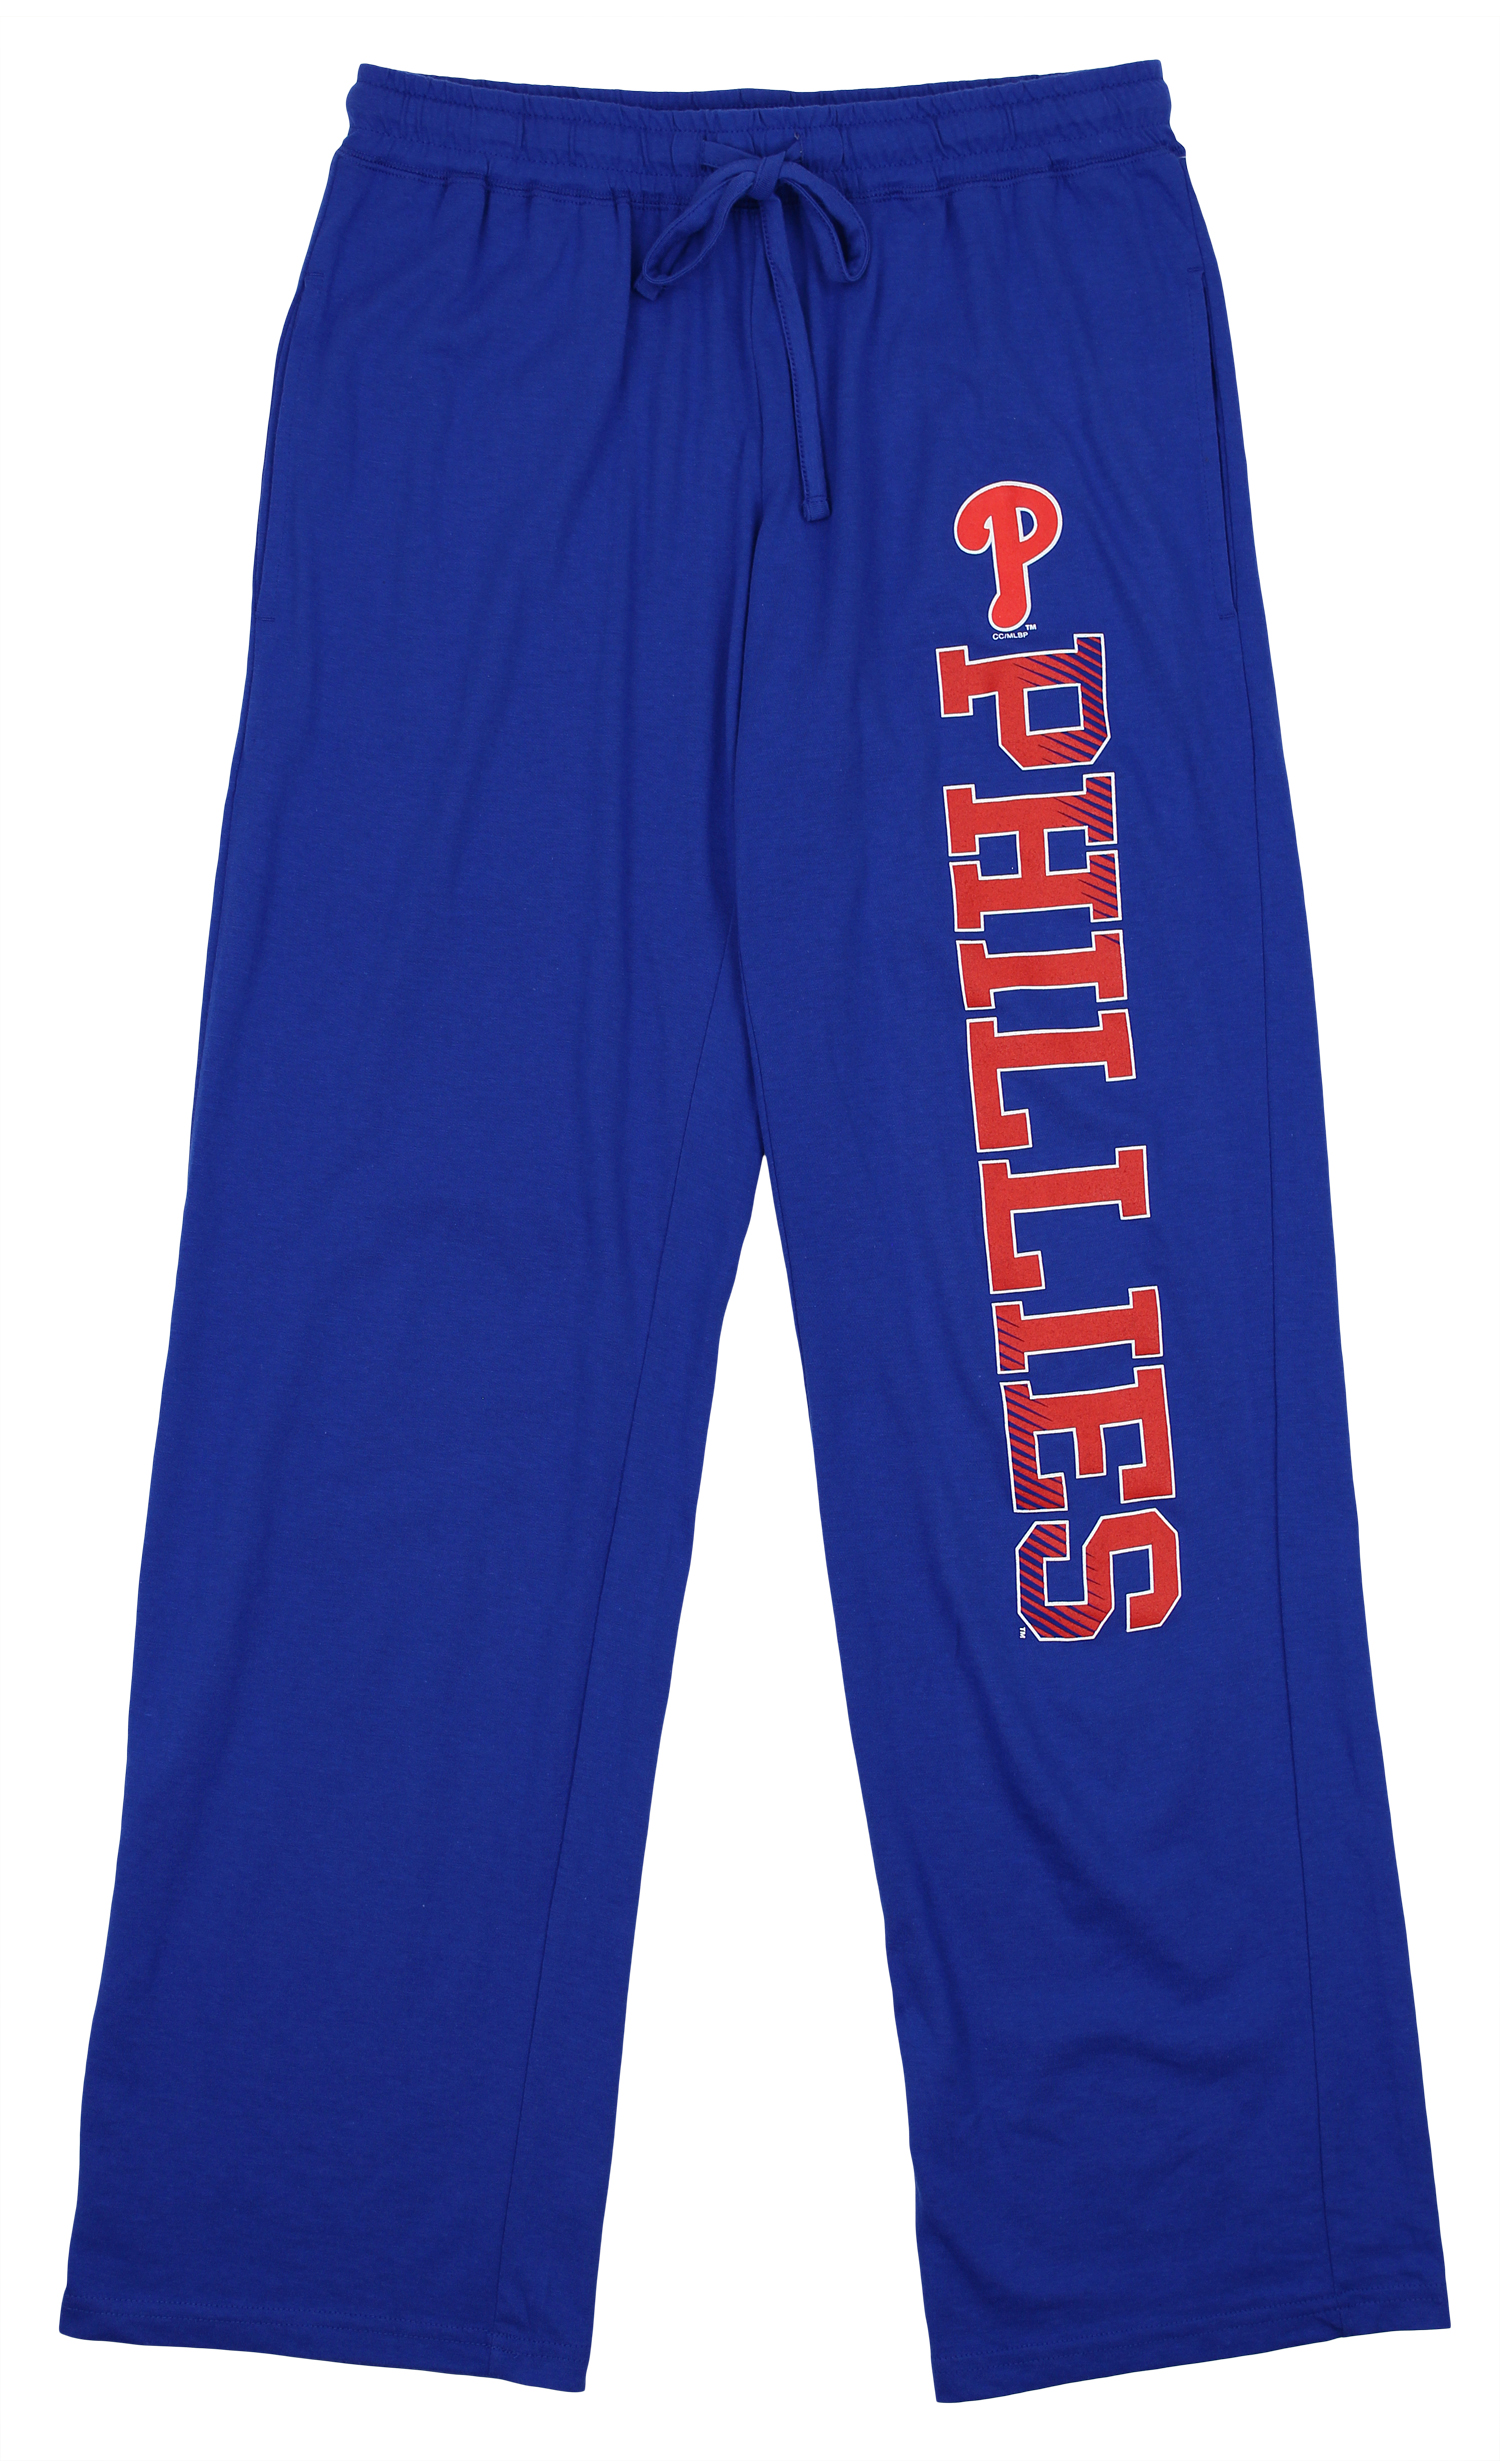 Concepts Sport MLB Women's Phildelphia Phillies Knit Pants | eBay